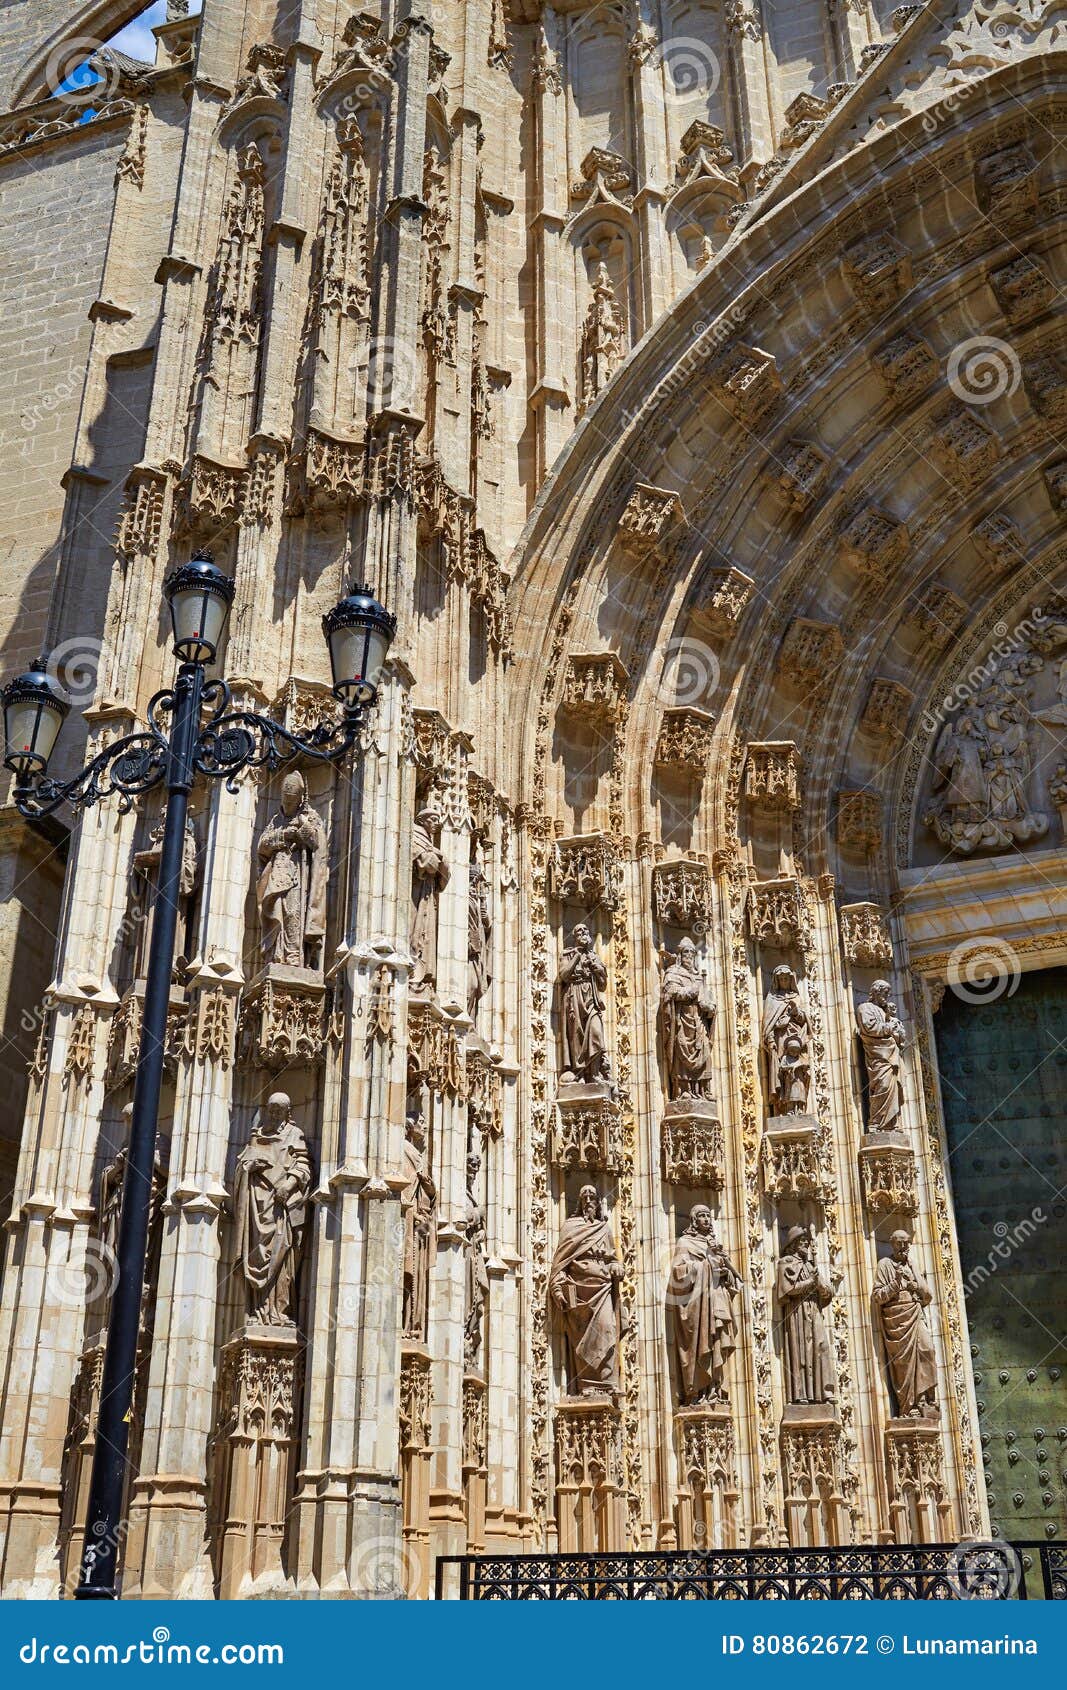 seville cathedral facade in constitucion spain